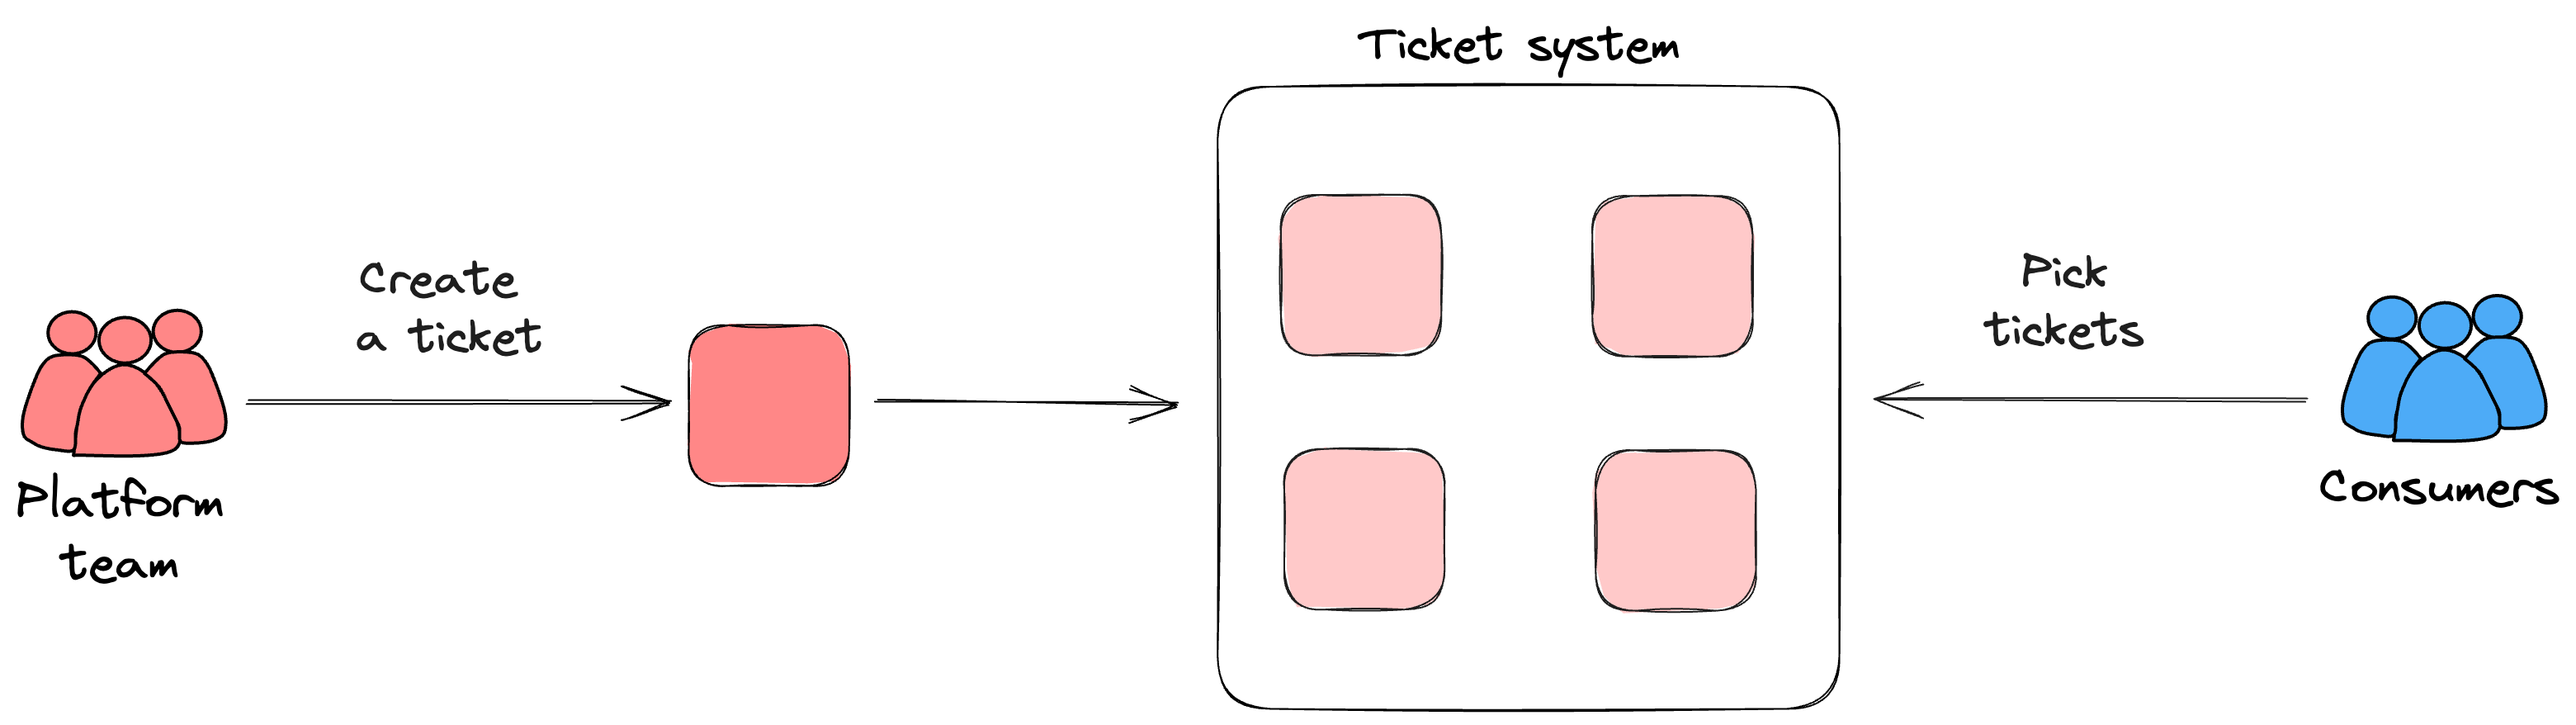 Ticket system 1